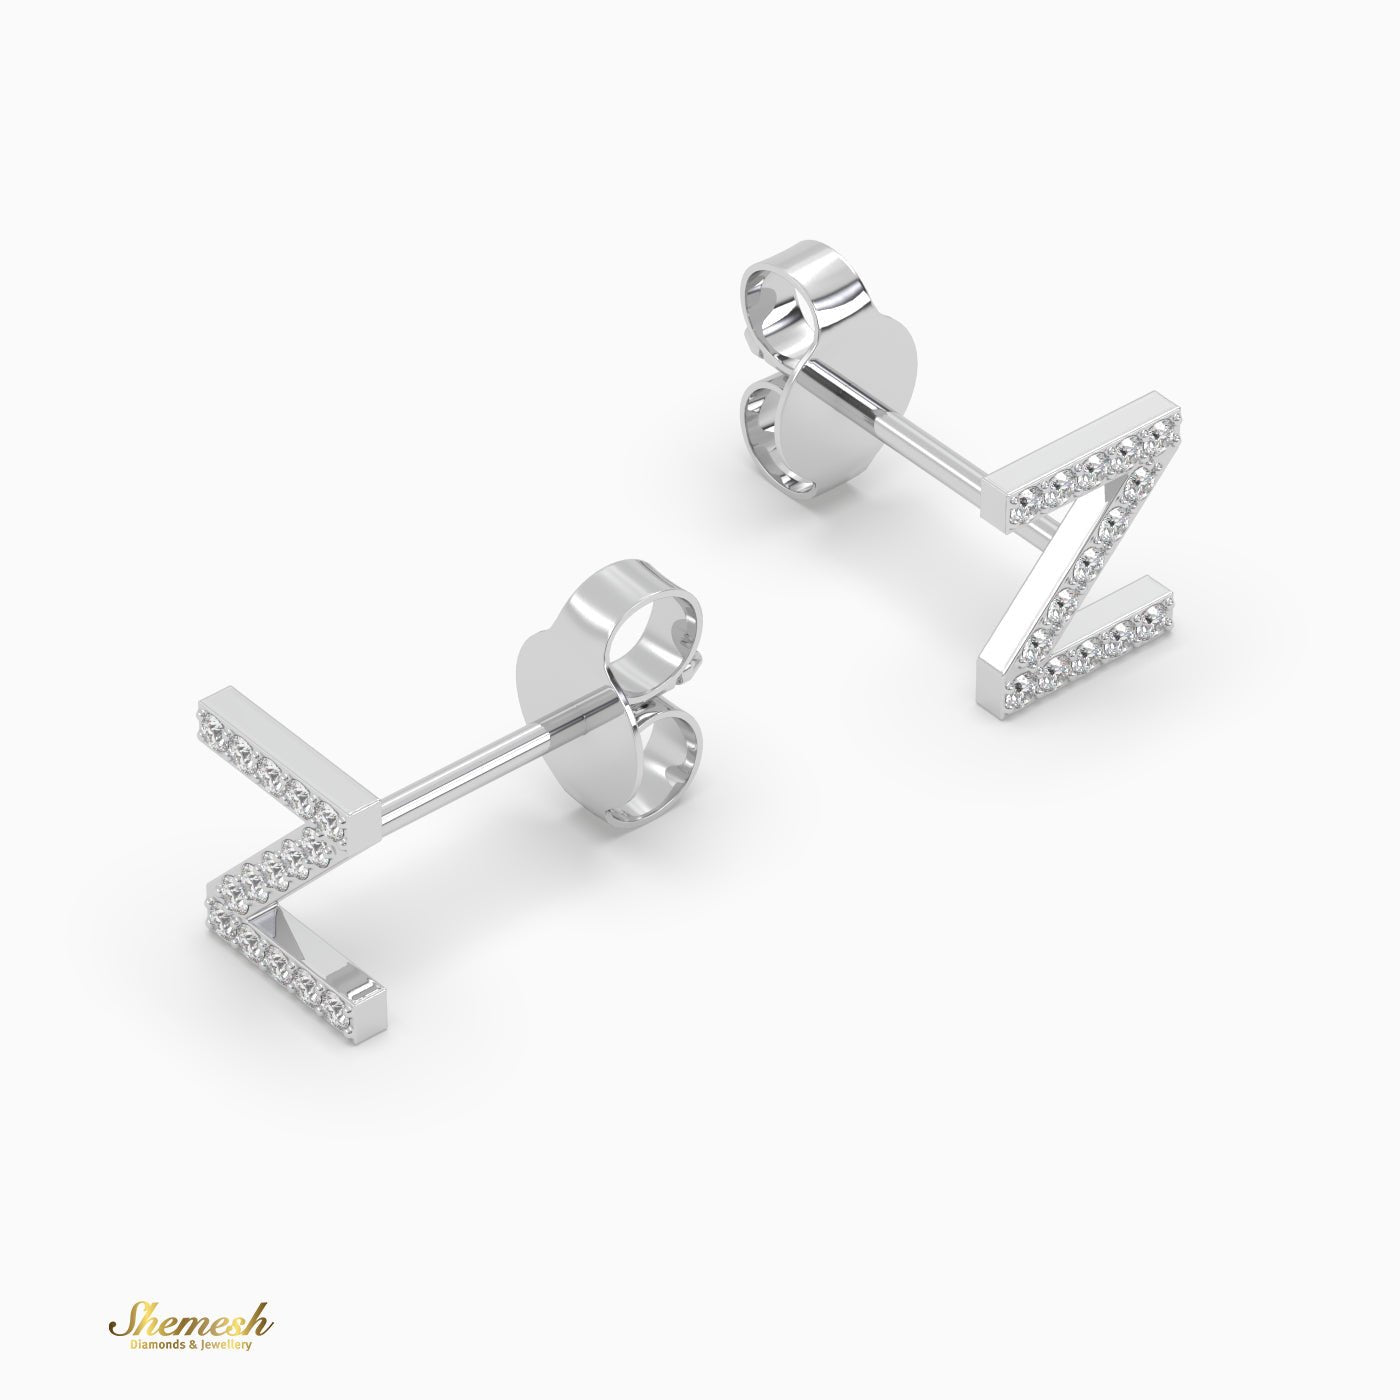 18K Gold "Z" Initial Stud Earrings - shemesh_diamonds